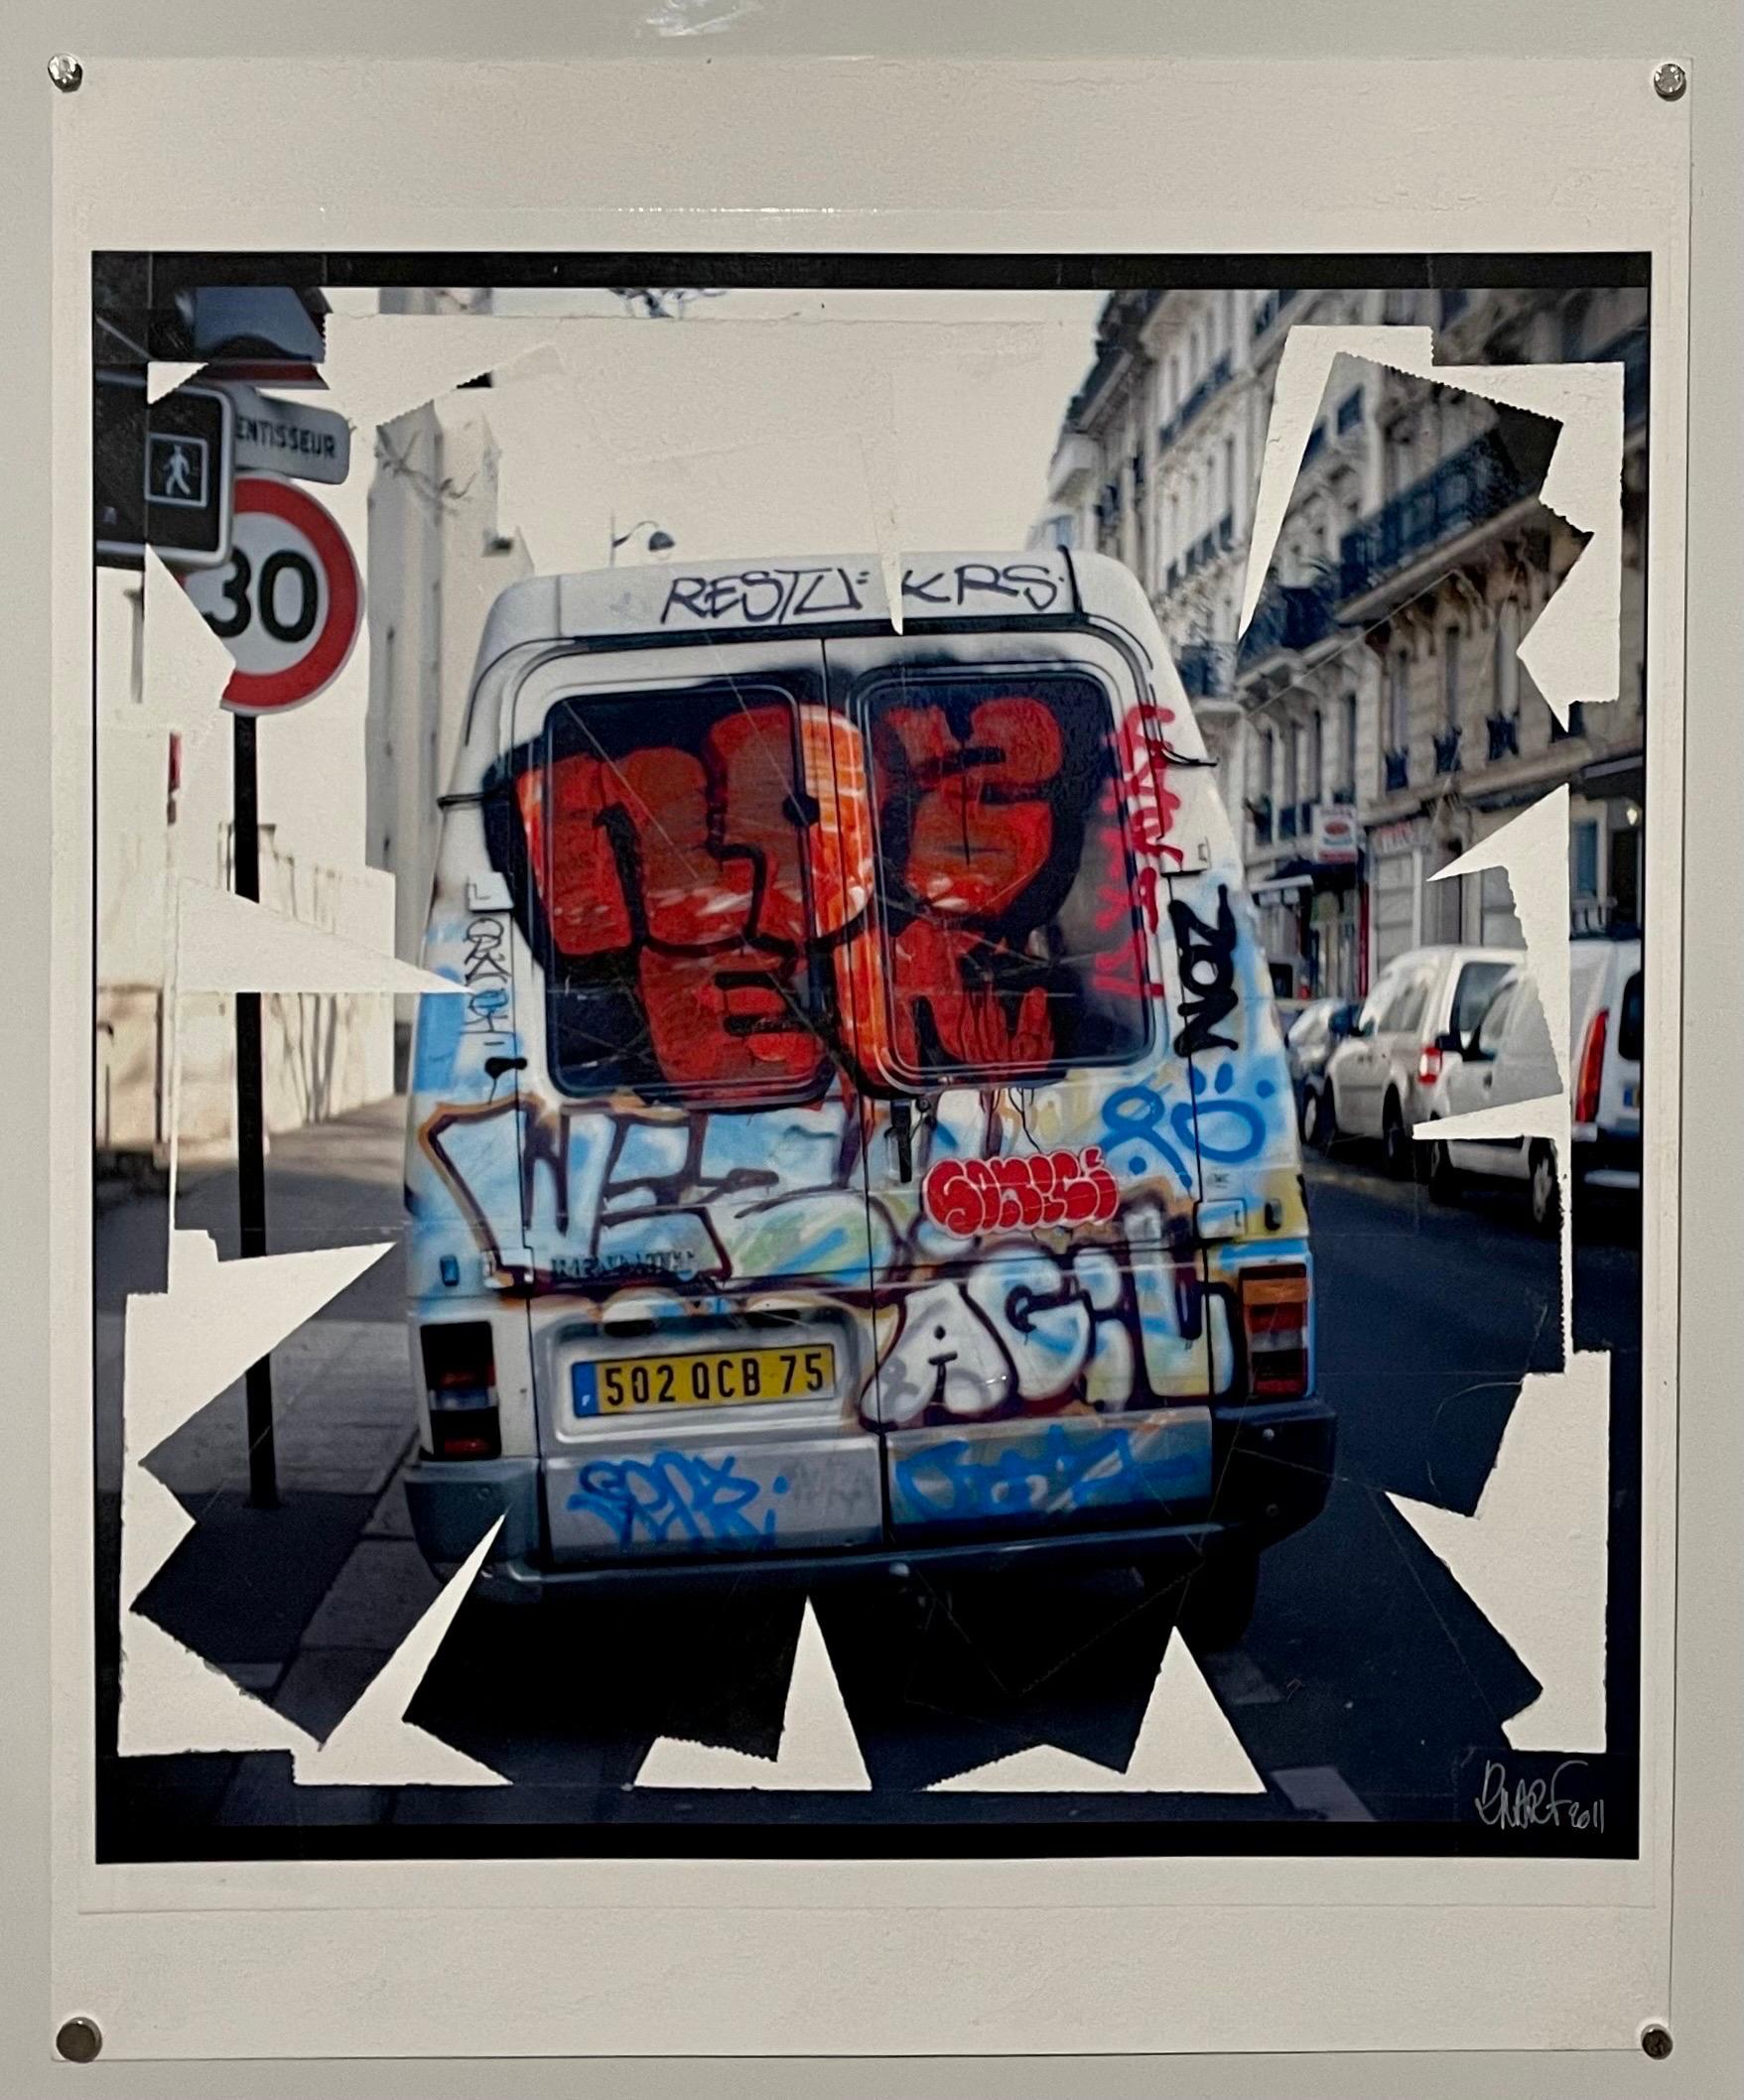 K-Narf Farbfotografie Graffiti, Klebeband Alterte Street Art Fotografie Collage im Angebot 9